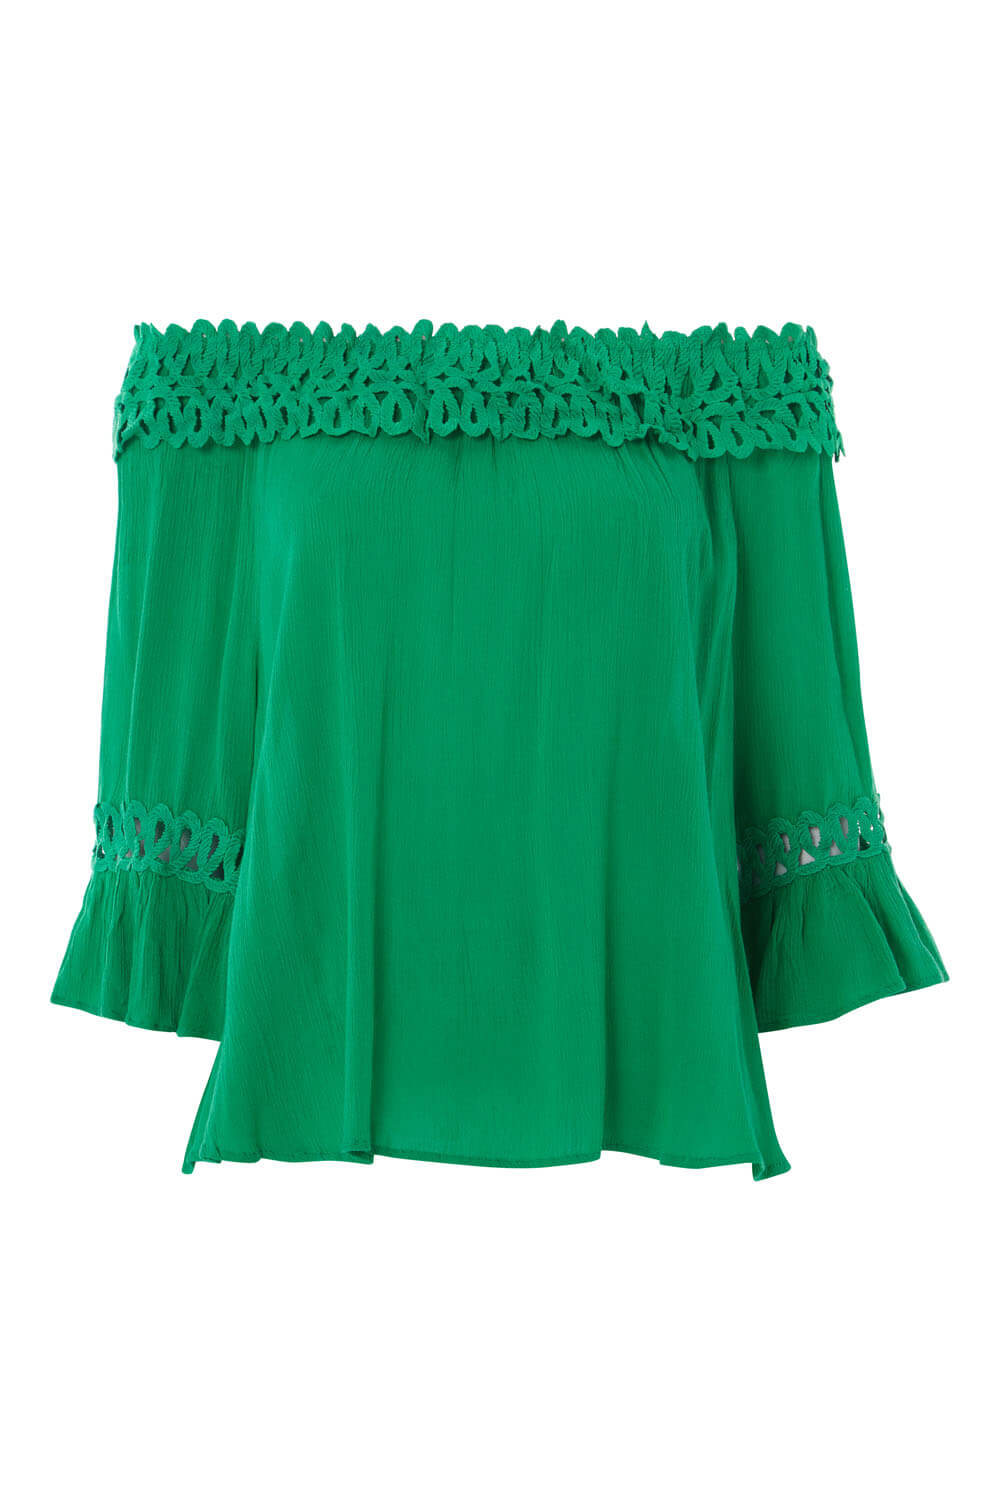 Green Lace Trim Bardot Top , Image 4 of 4